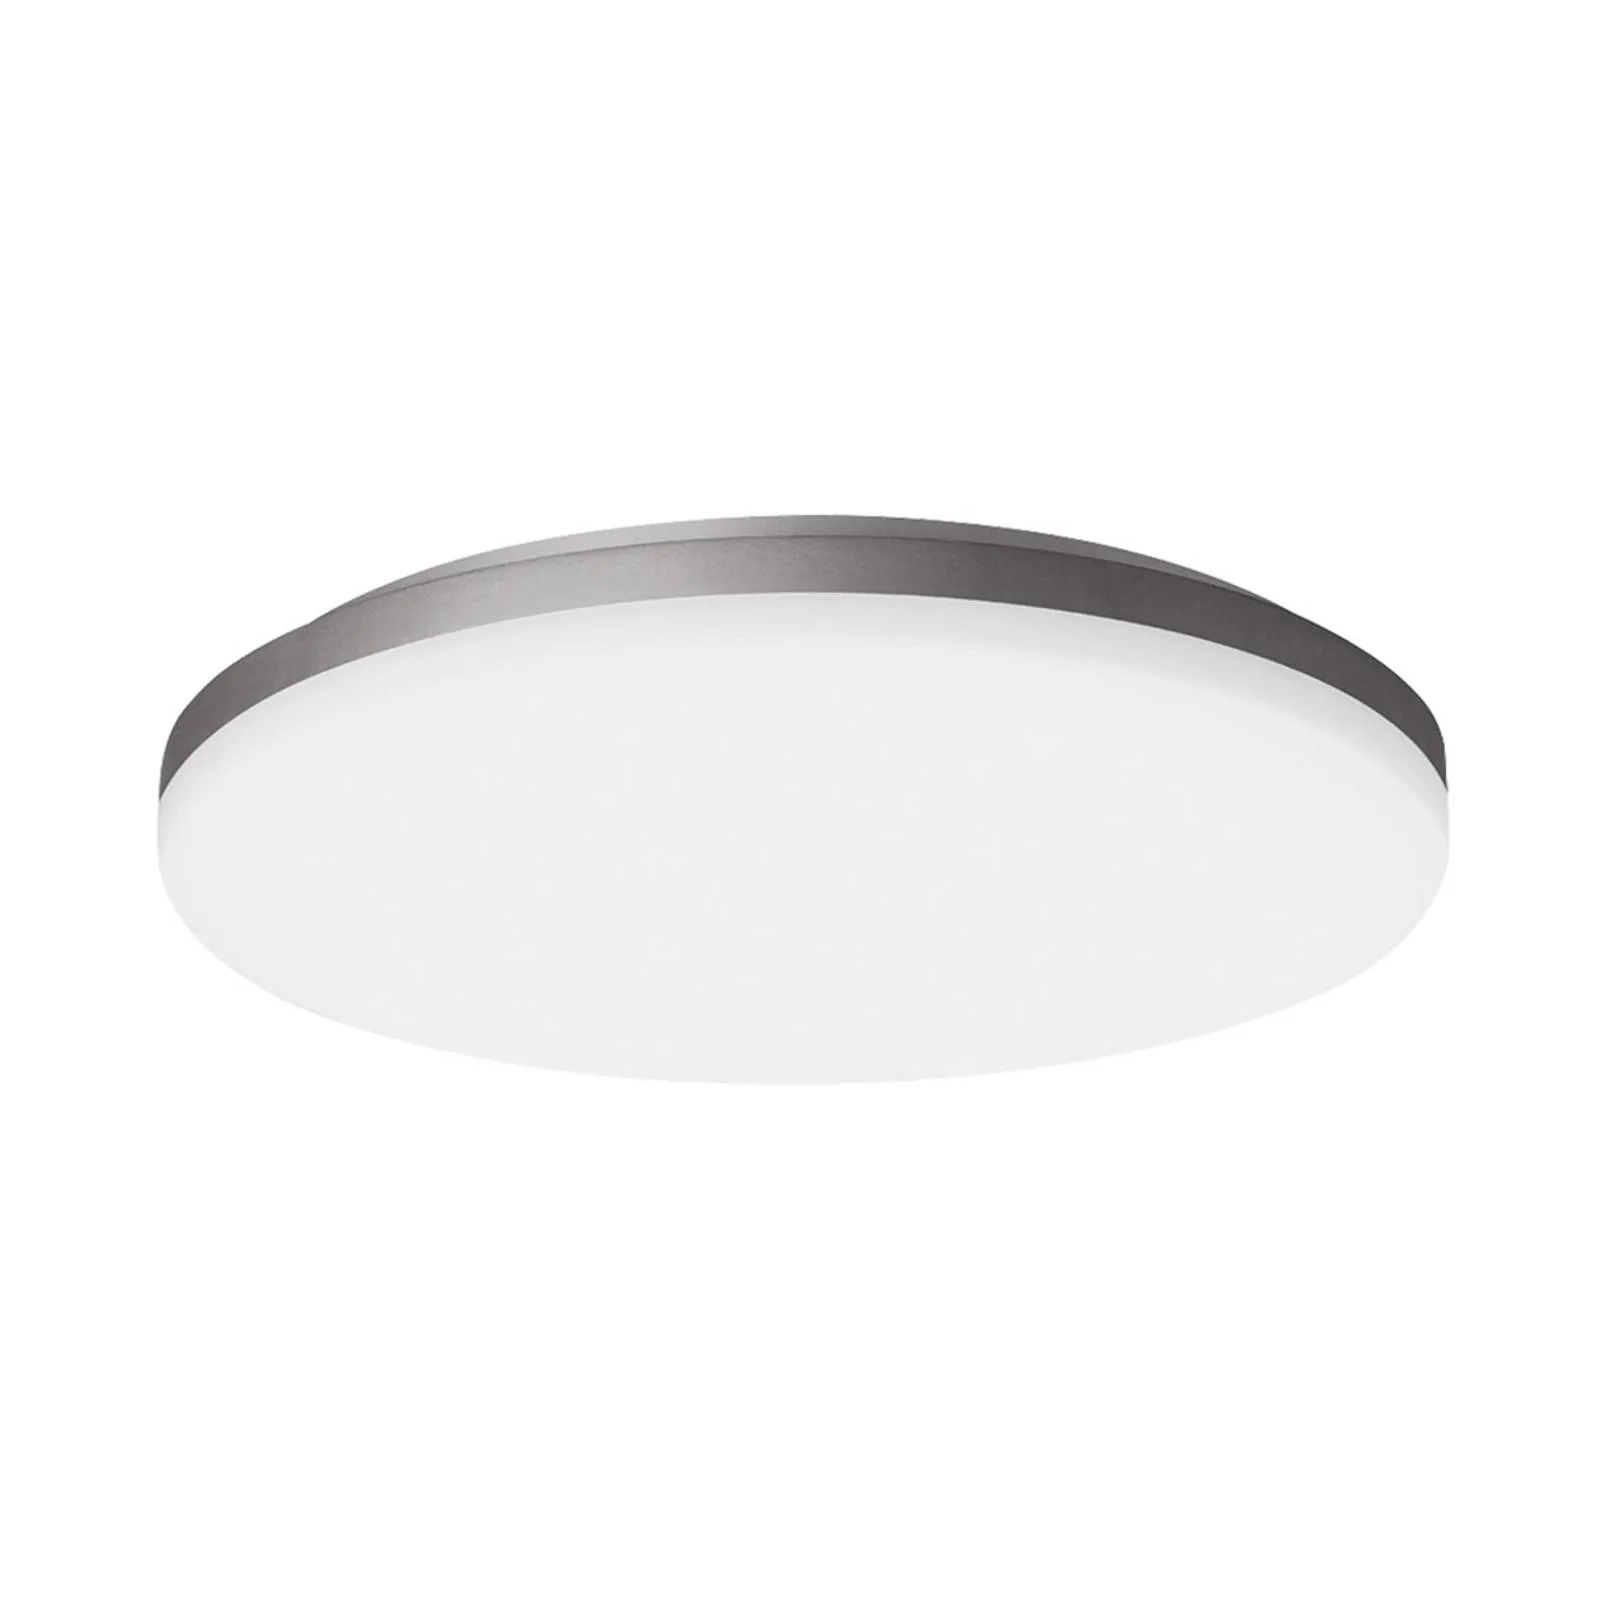 WL220 LED ceiling light round plastic 15 W Ø 22 cm